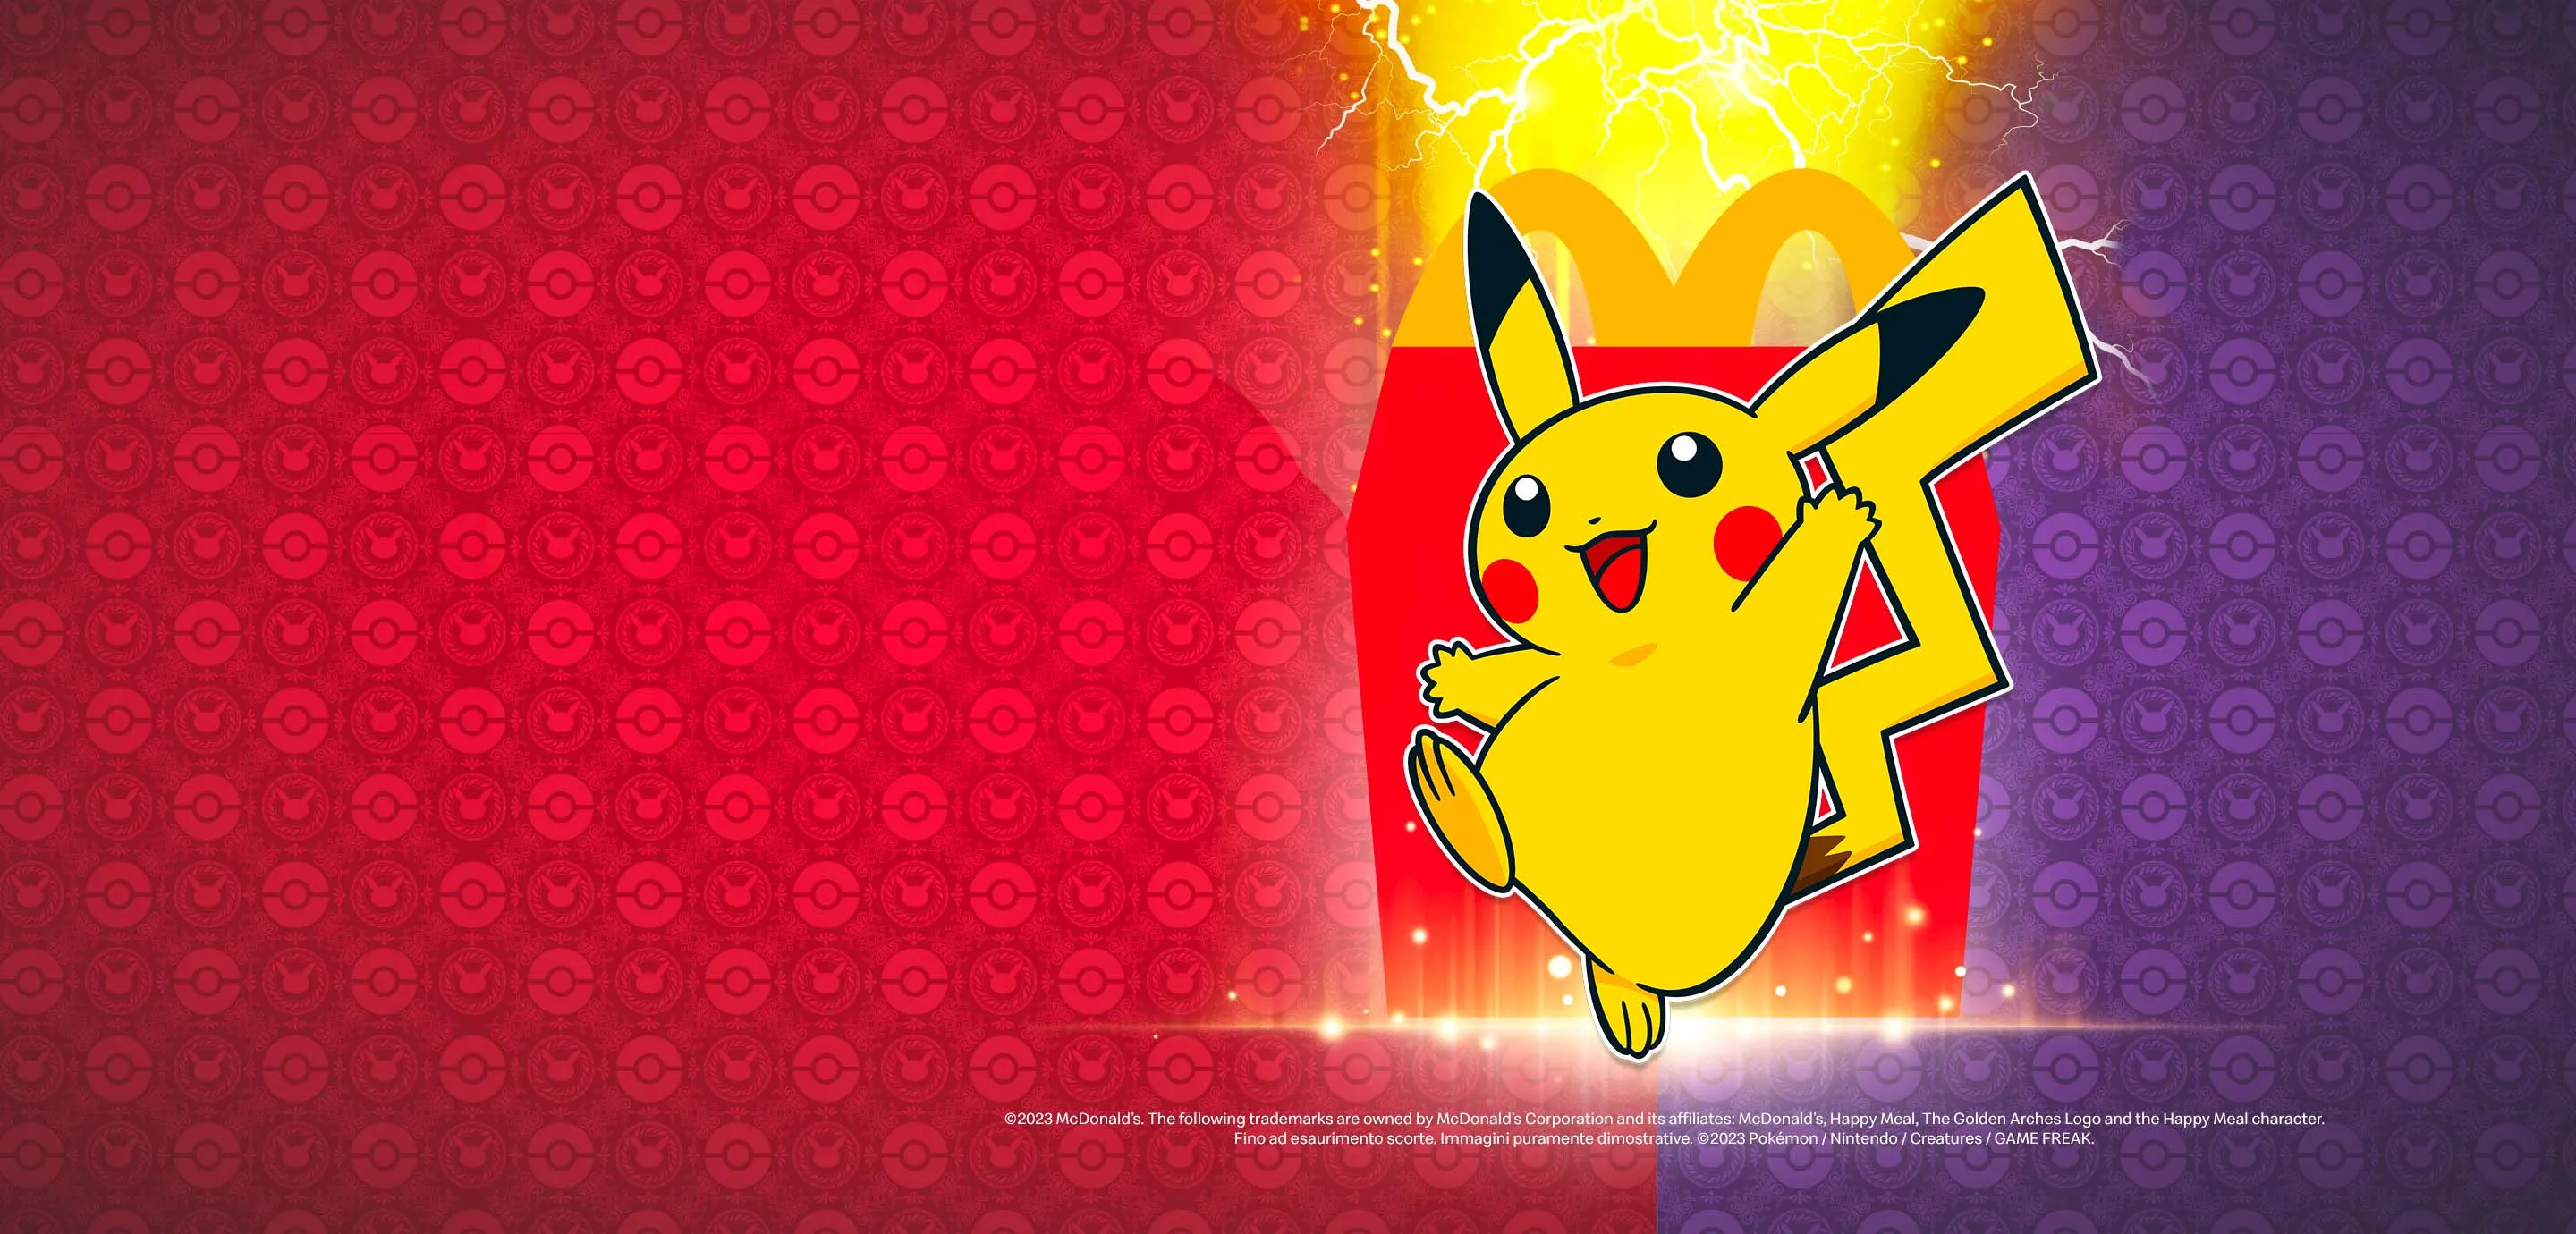 Slide Homepage - HM - Pokémon 23/09